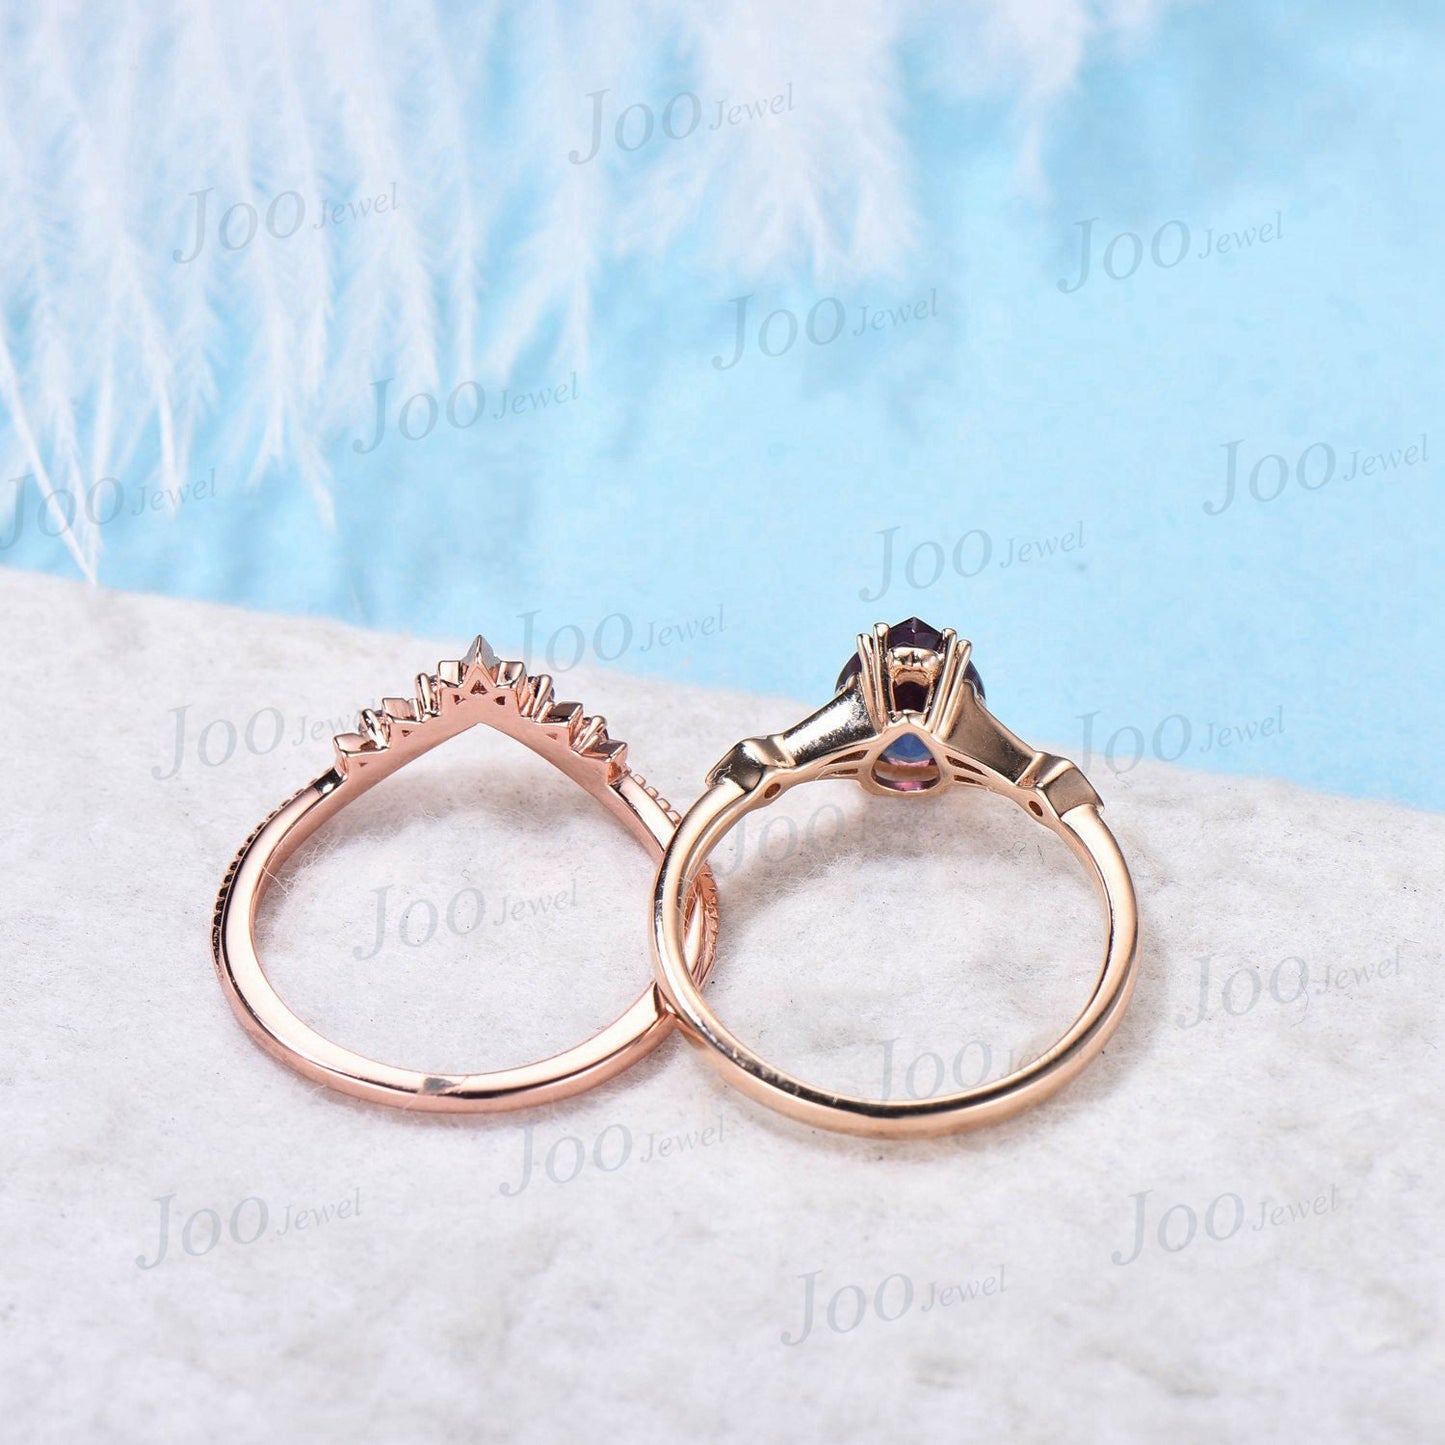 1.25ct Pear Shaped Alexandrite Ring Set Moissanite Ring Milgrain Alexandrite Wedding Band June Birthstone Ring Color Change Engagement Ring